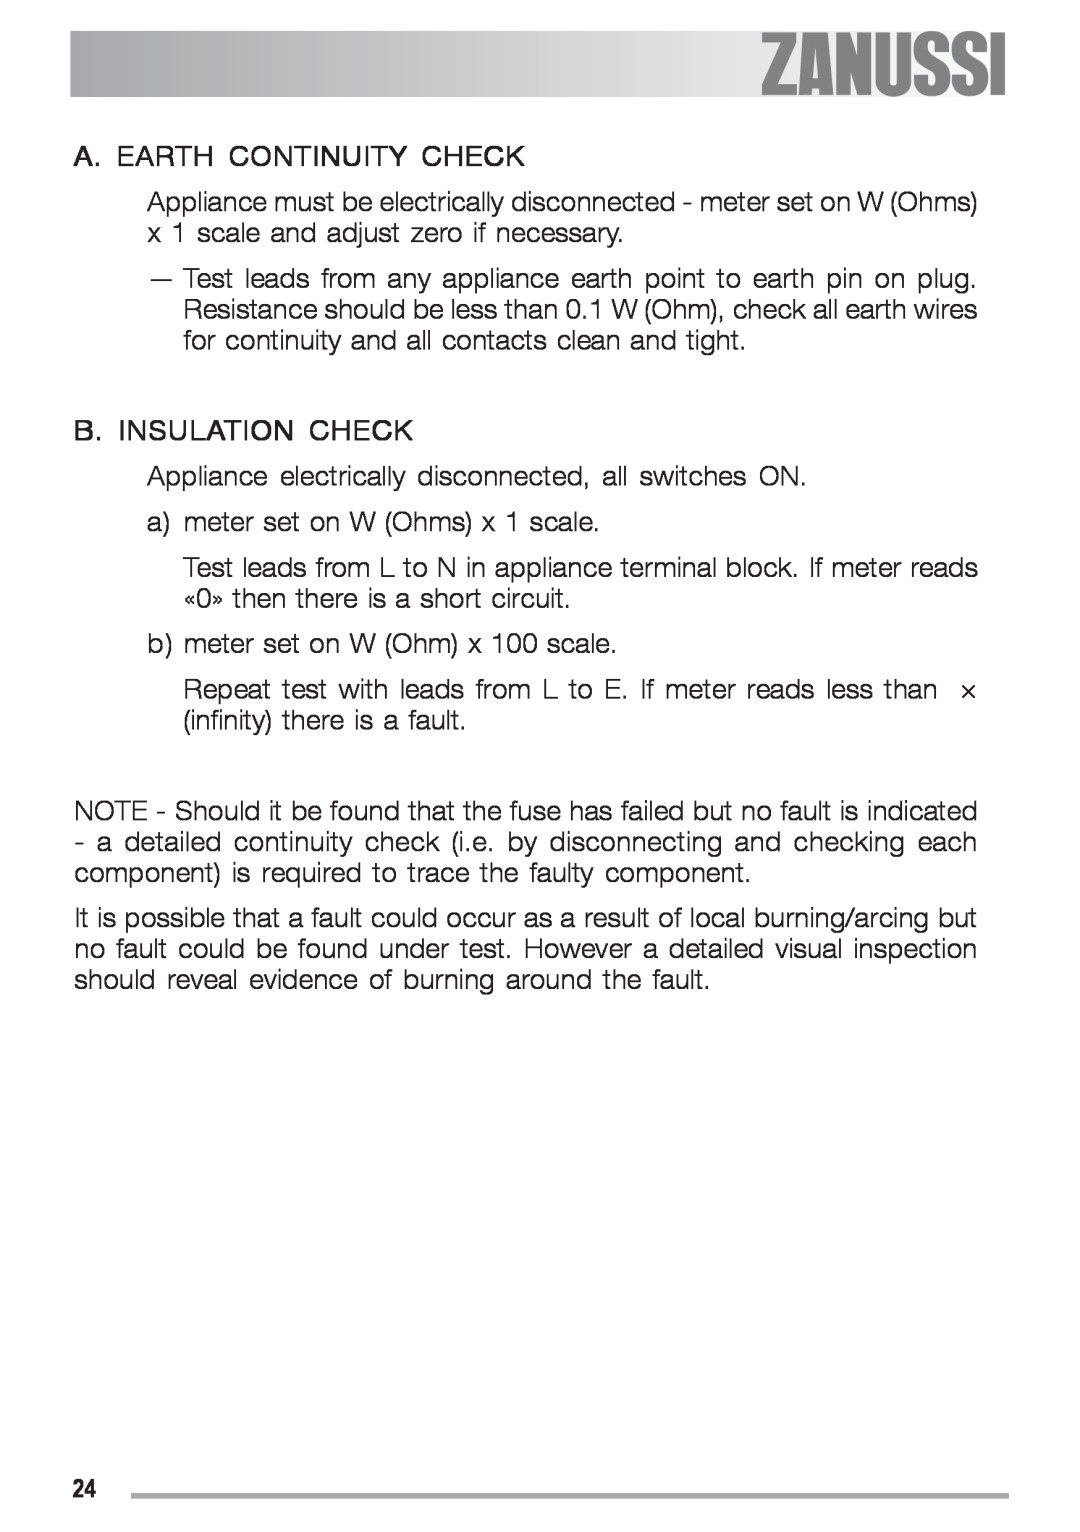 Zanussi ZGF 692 CT manual A. Earth Continuity Check, B. Insulation Check 